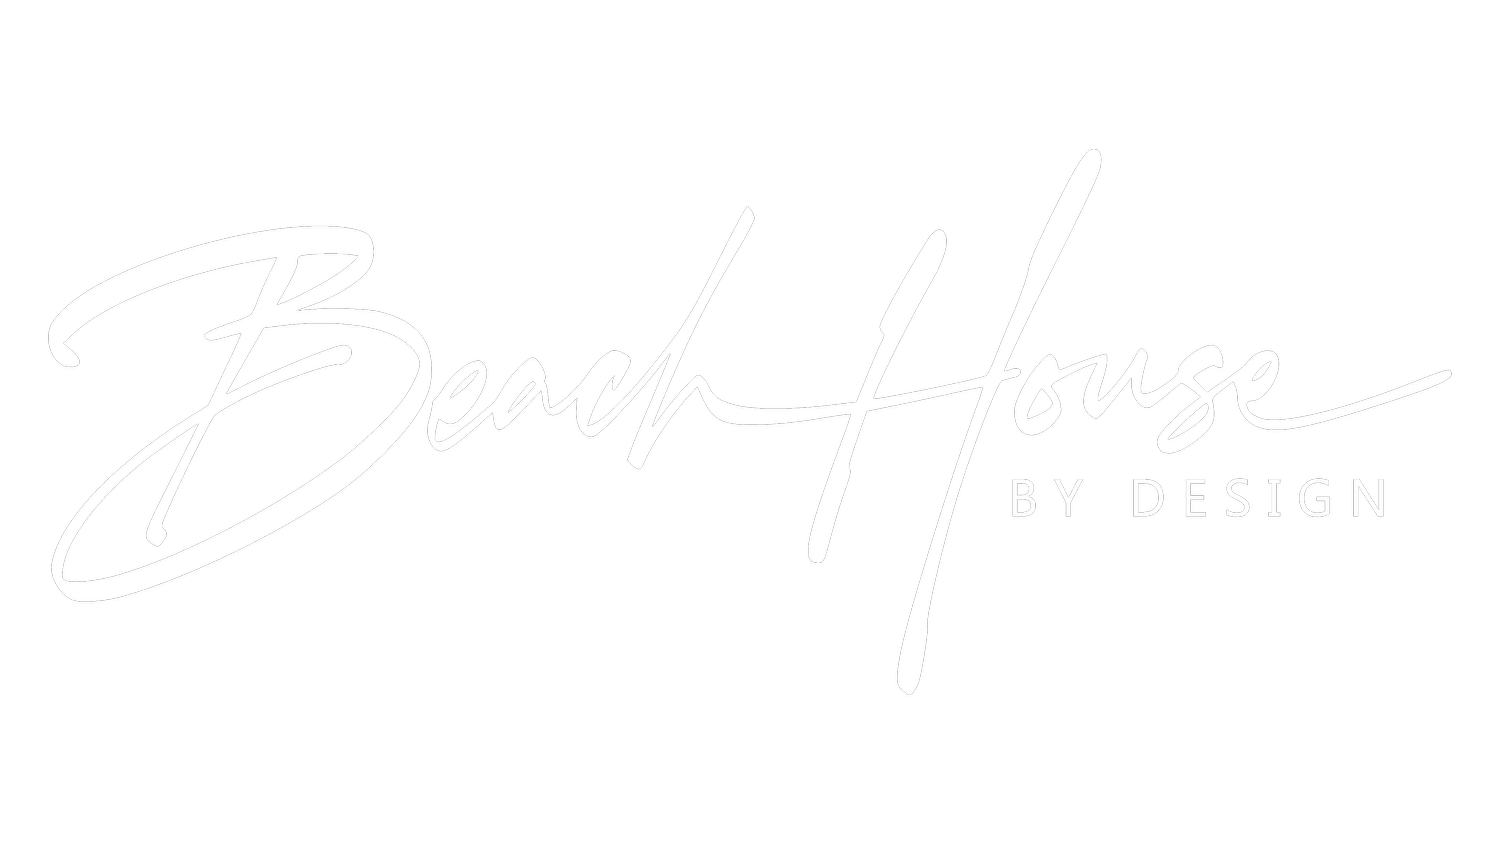 Beach House by Design